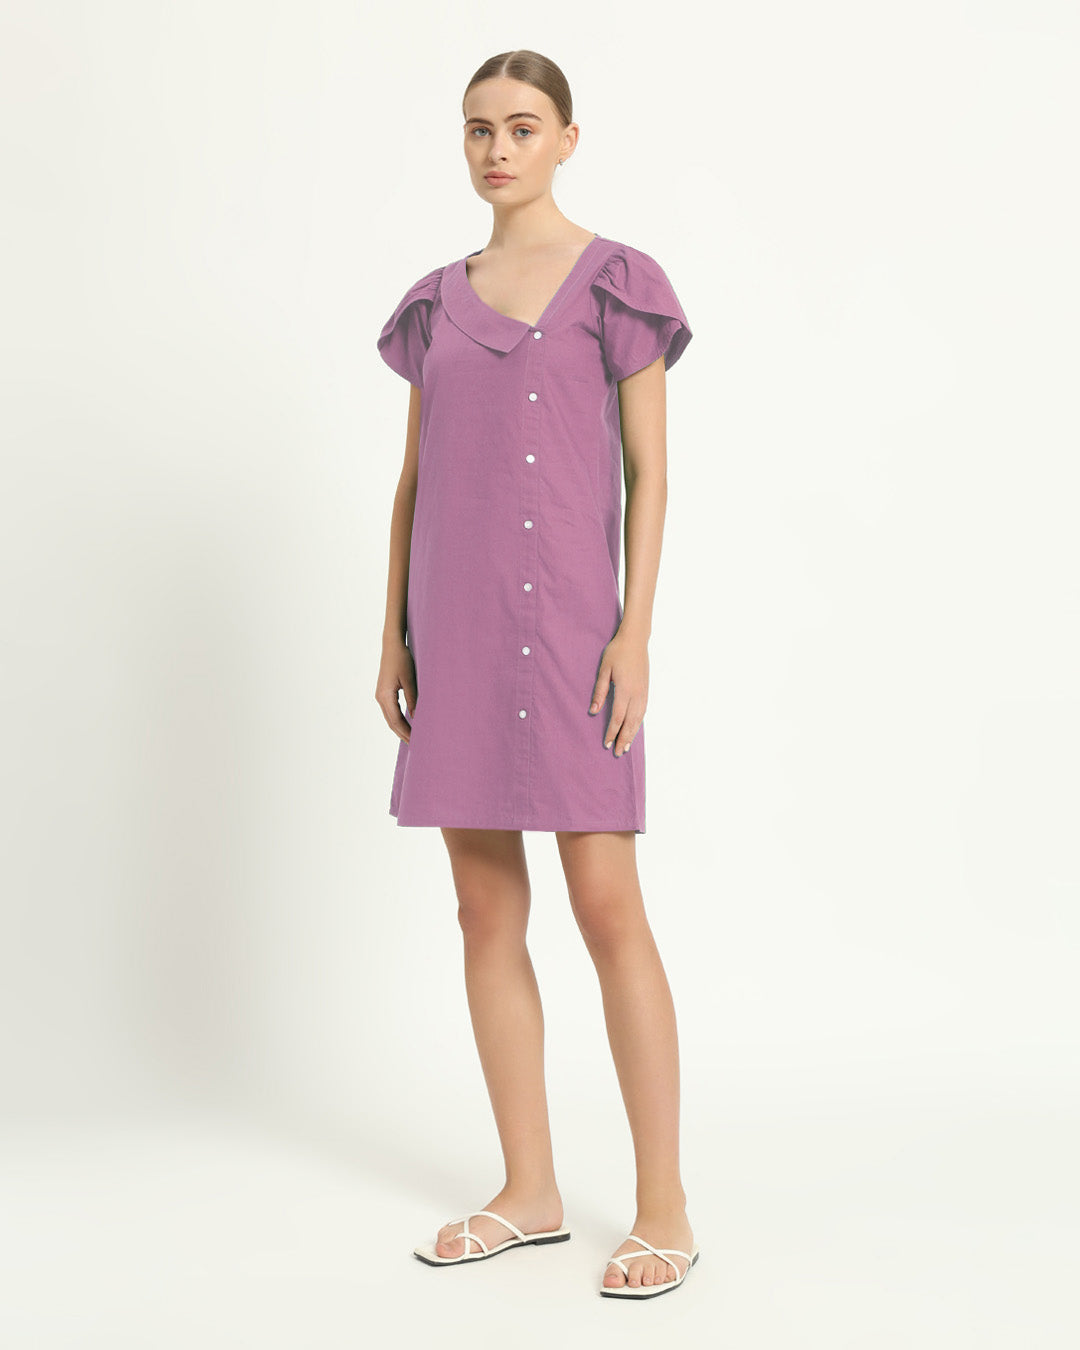 The Krensdorf Purple Swirl Cotton Dress